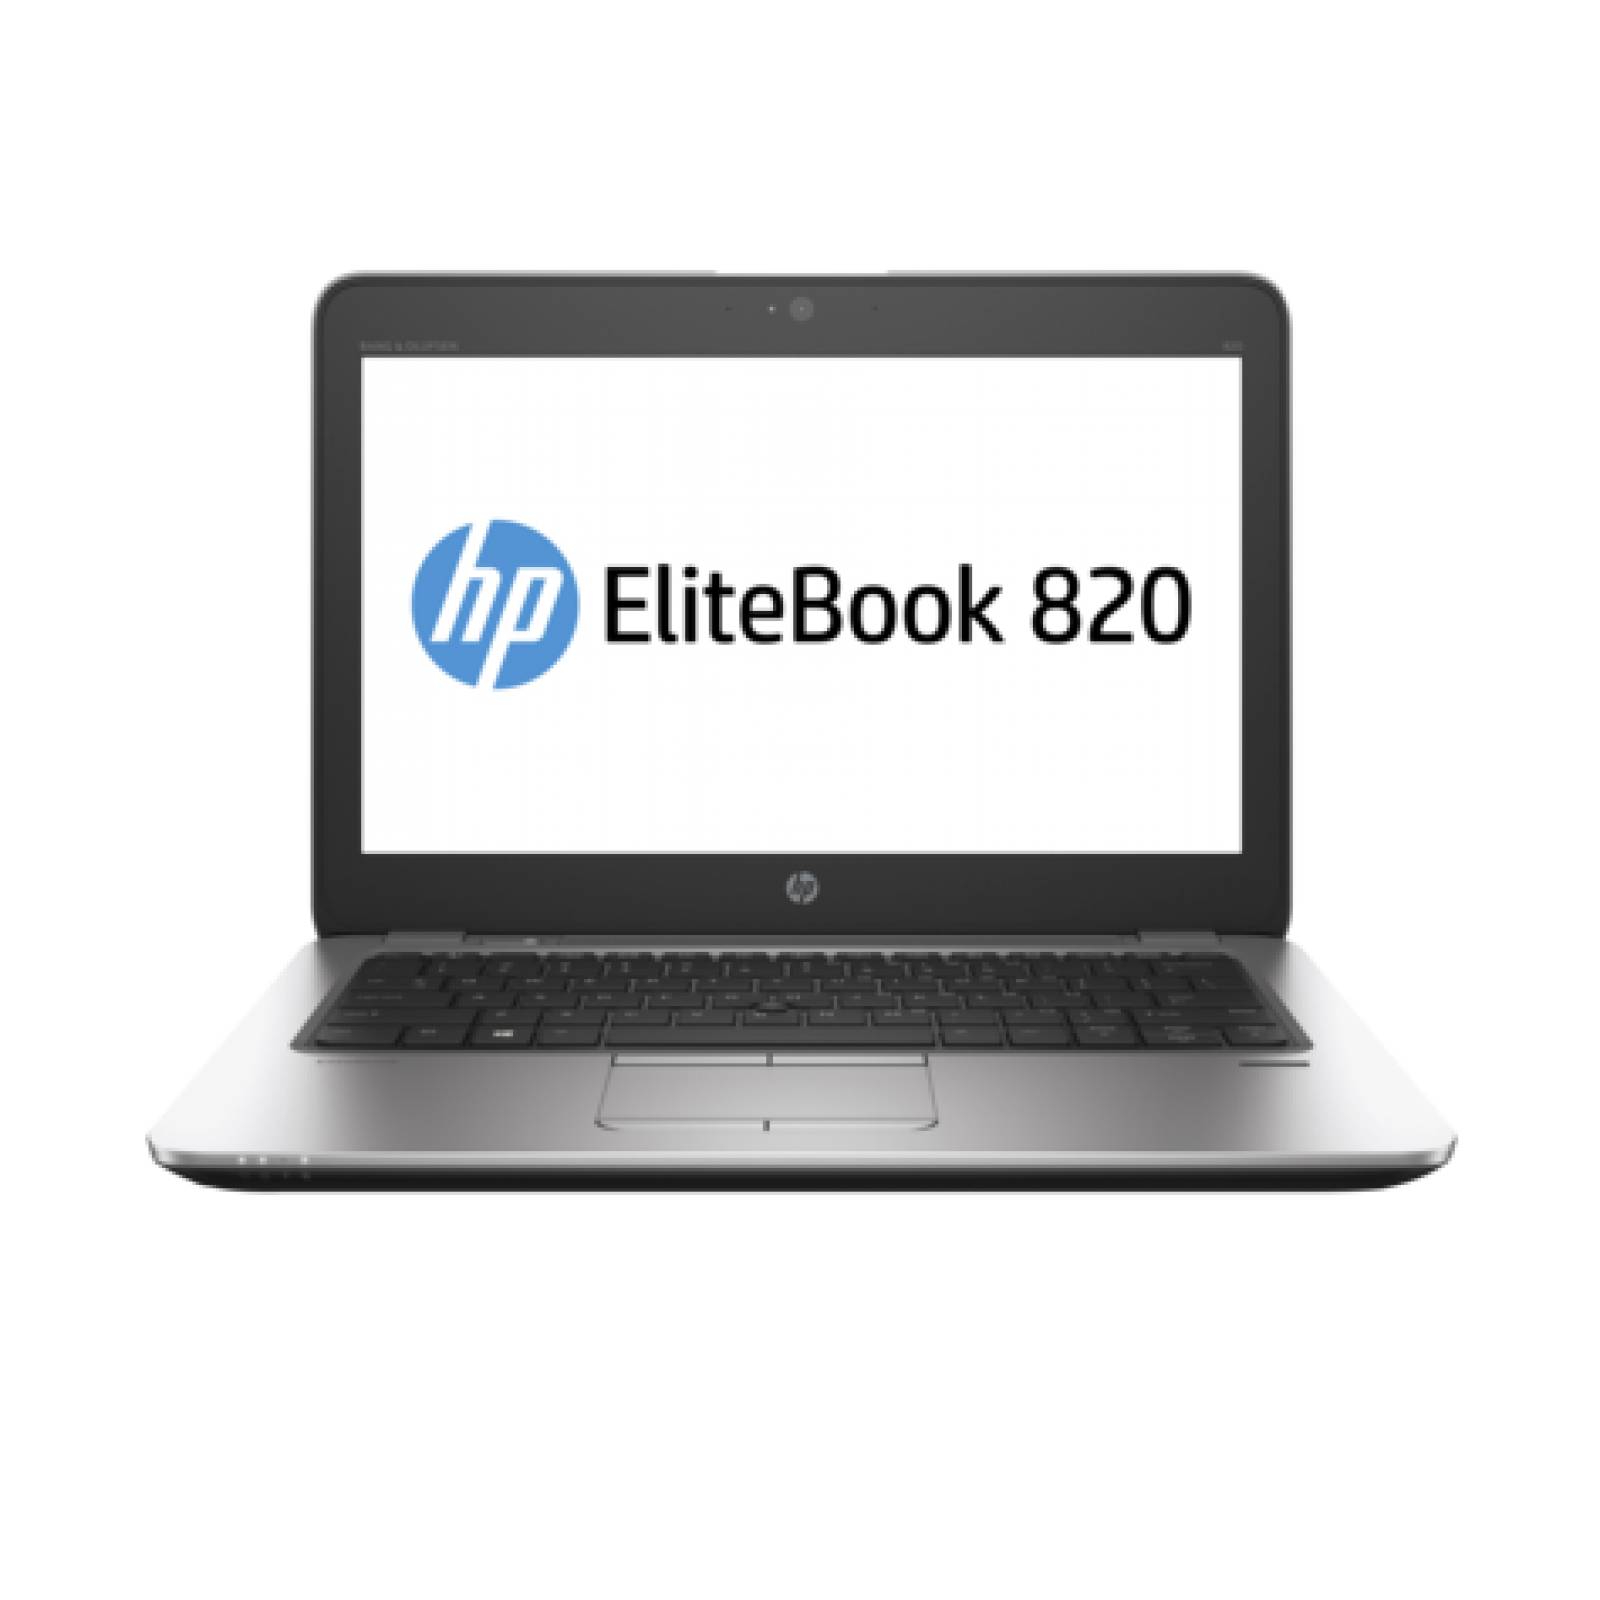 Laptop HP 4GB/500GB i5-6200U Win10 EliteBook 820 G3 - Reacondicionado